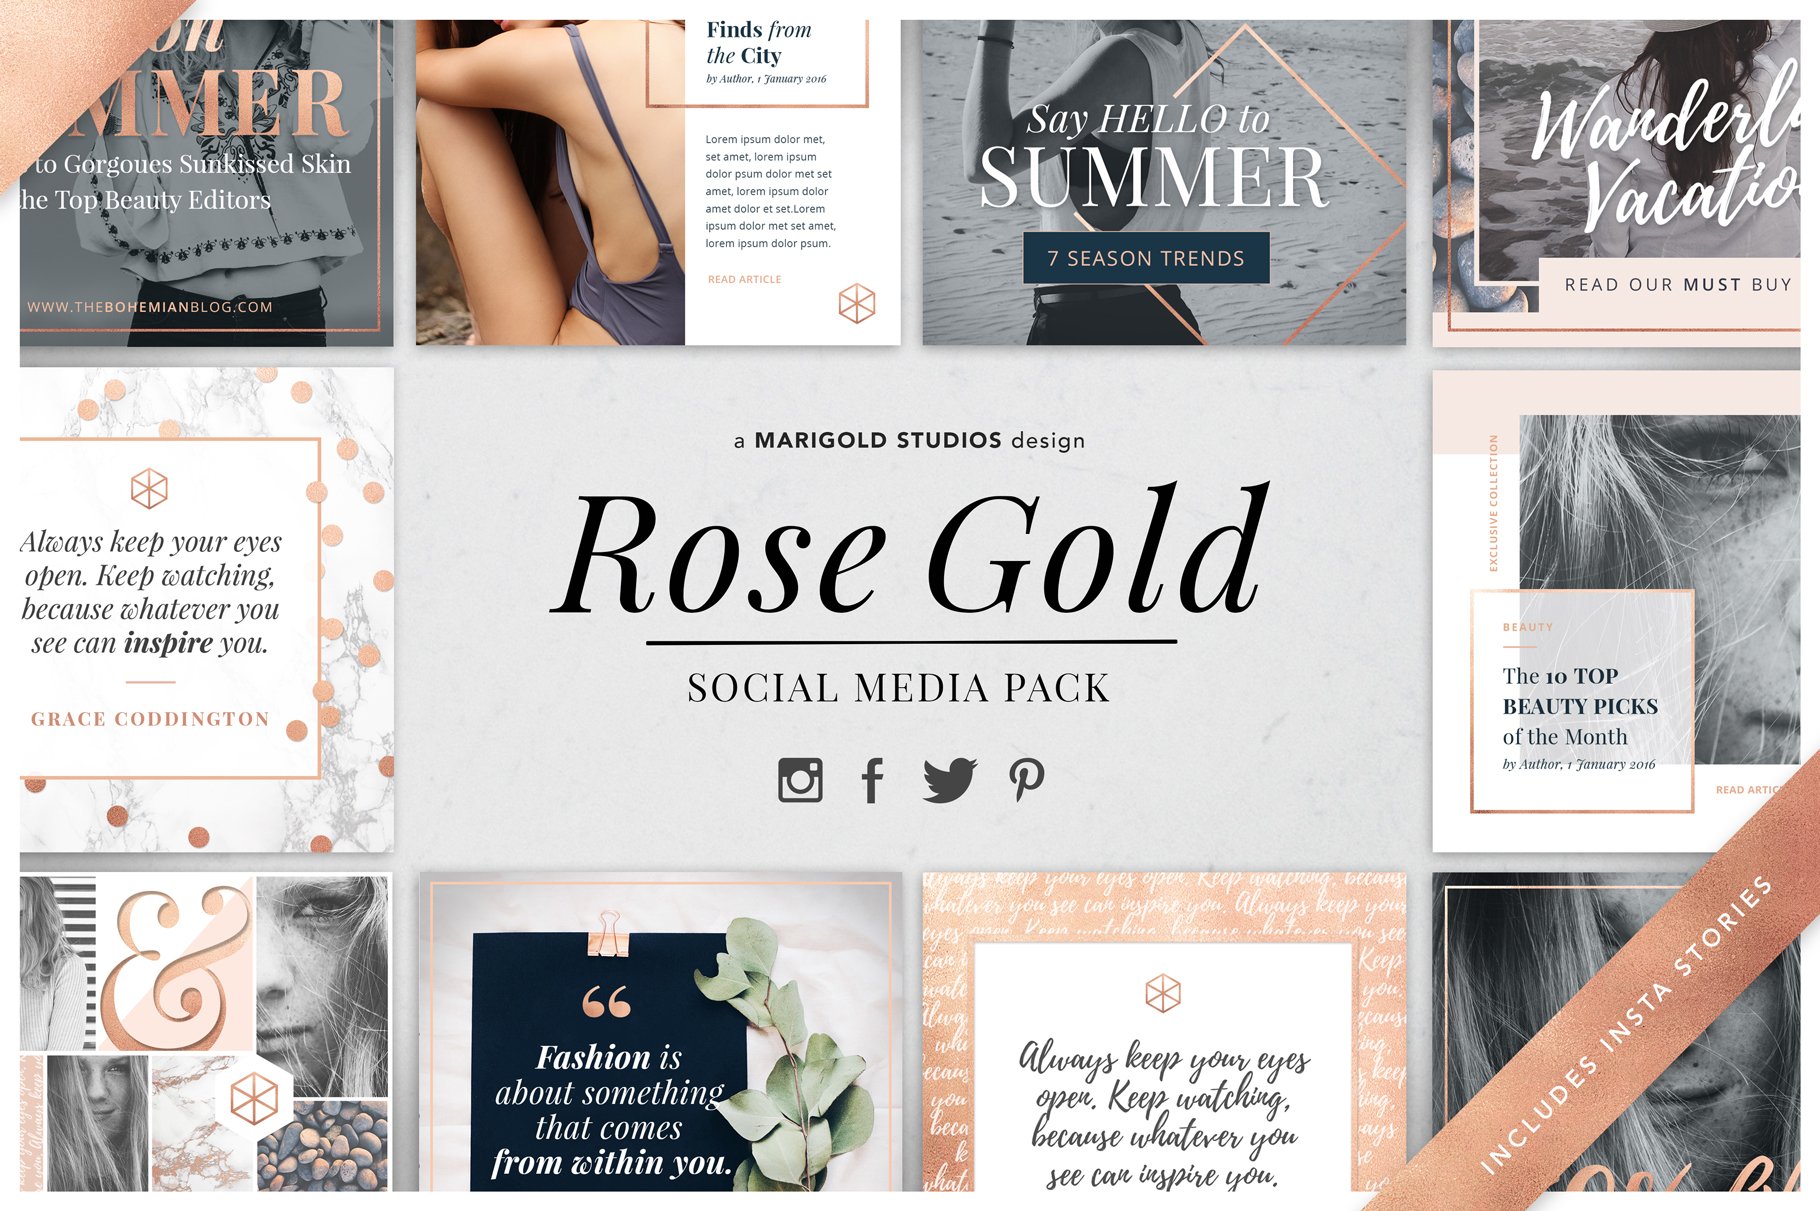 ROSE GOLD | Social Media Pack cover image.